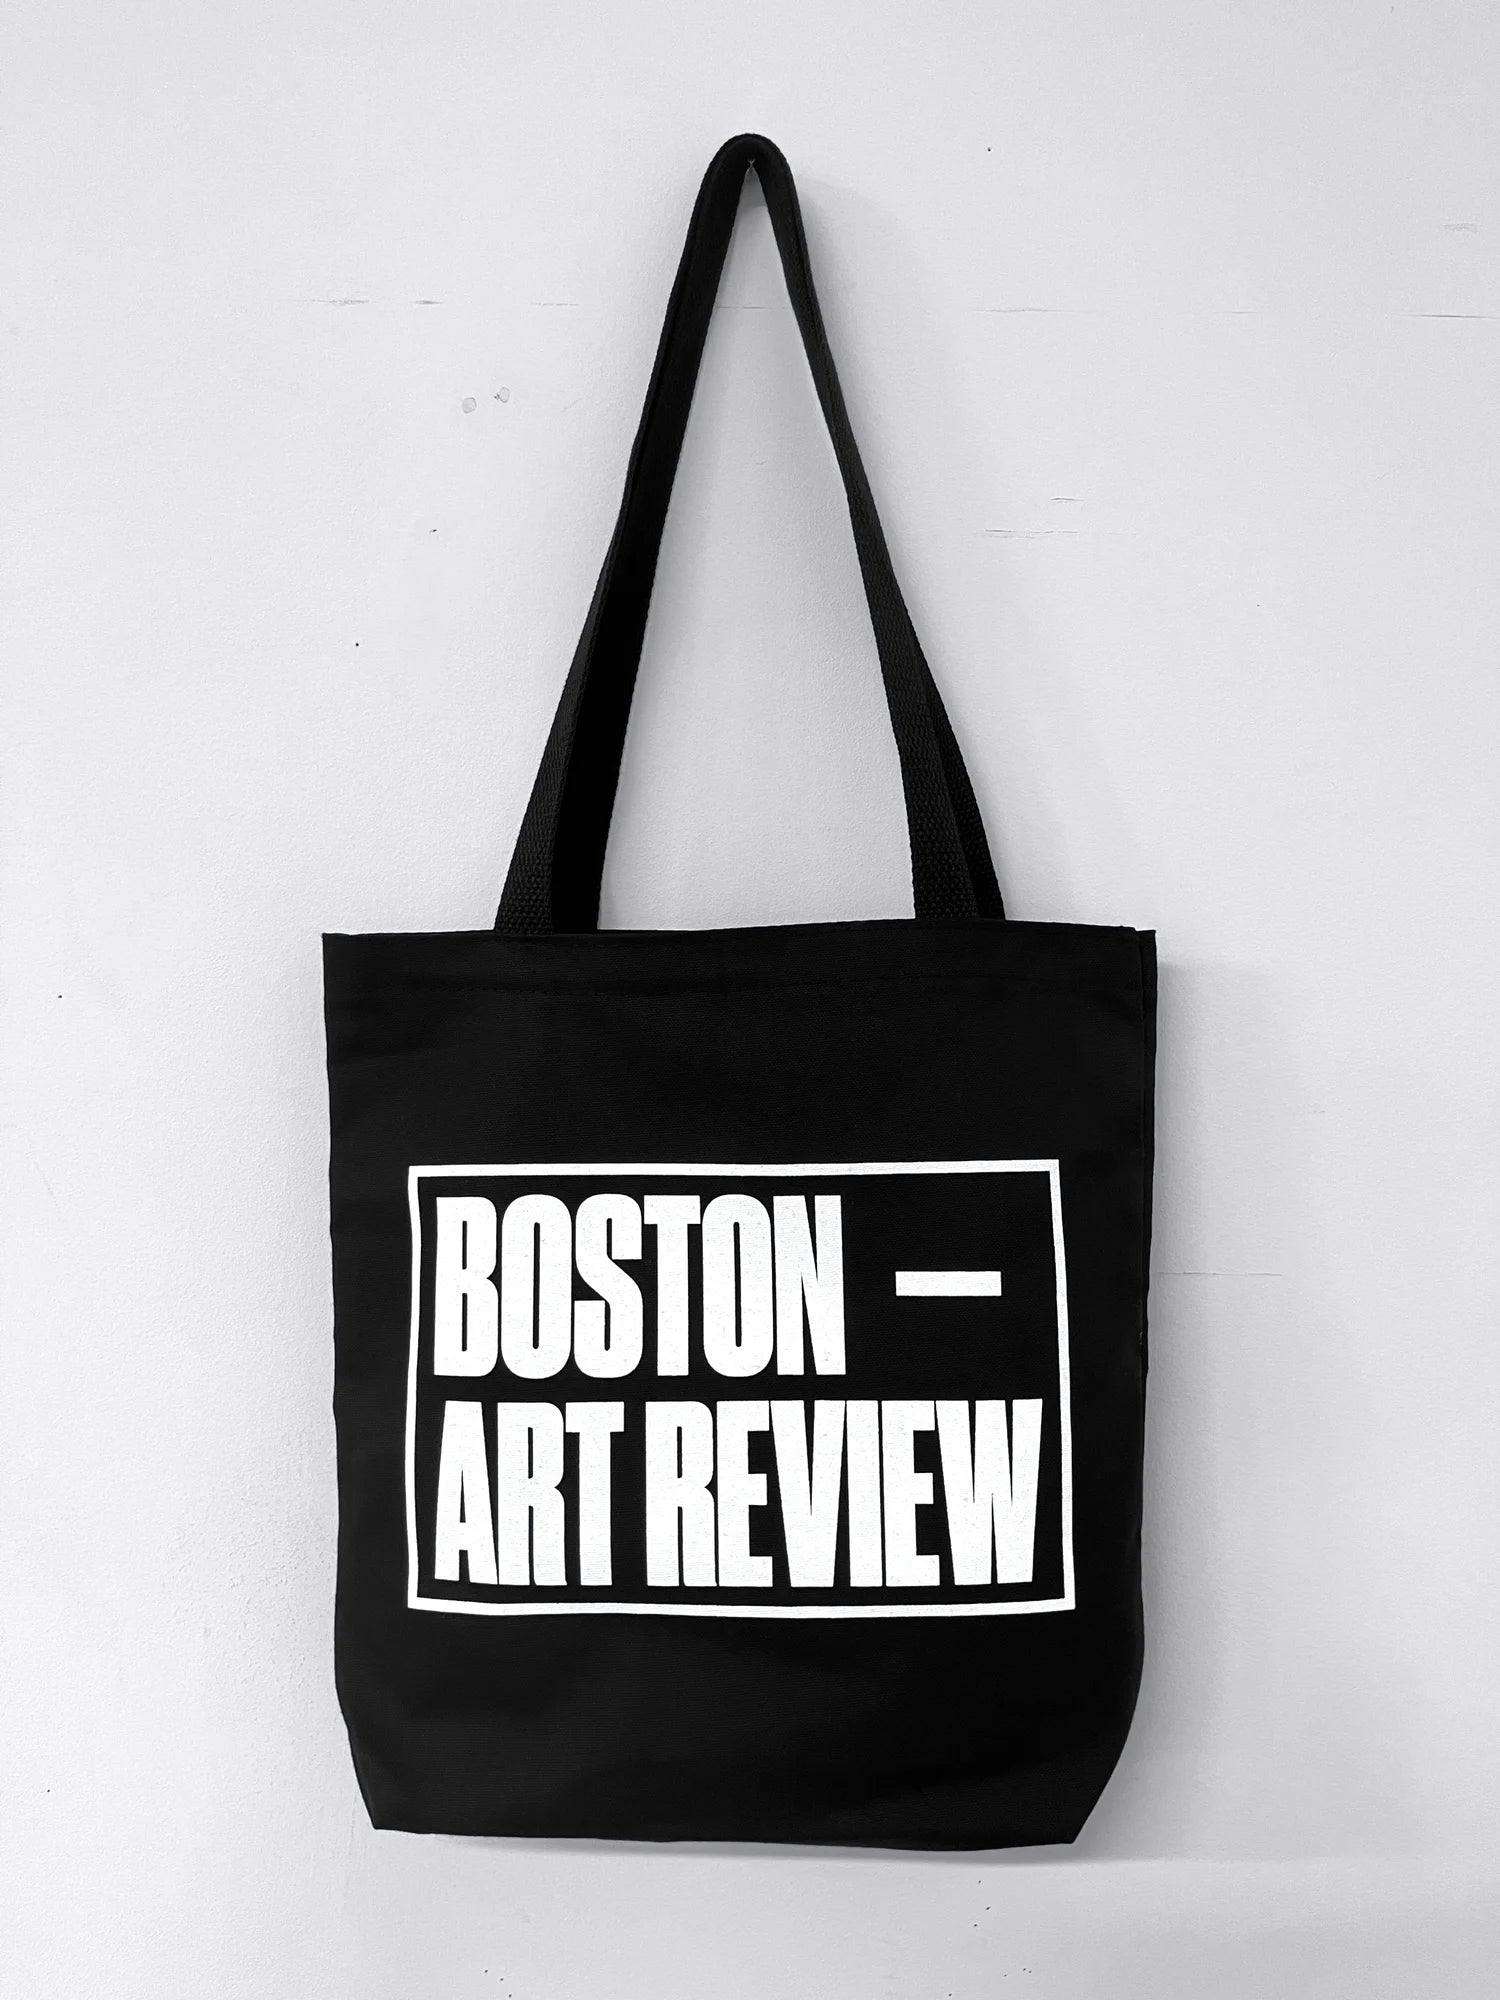 The Boston Art Review Tote